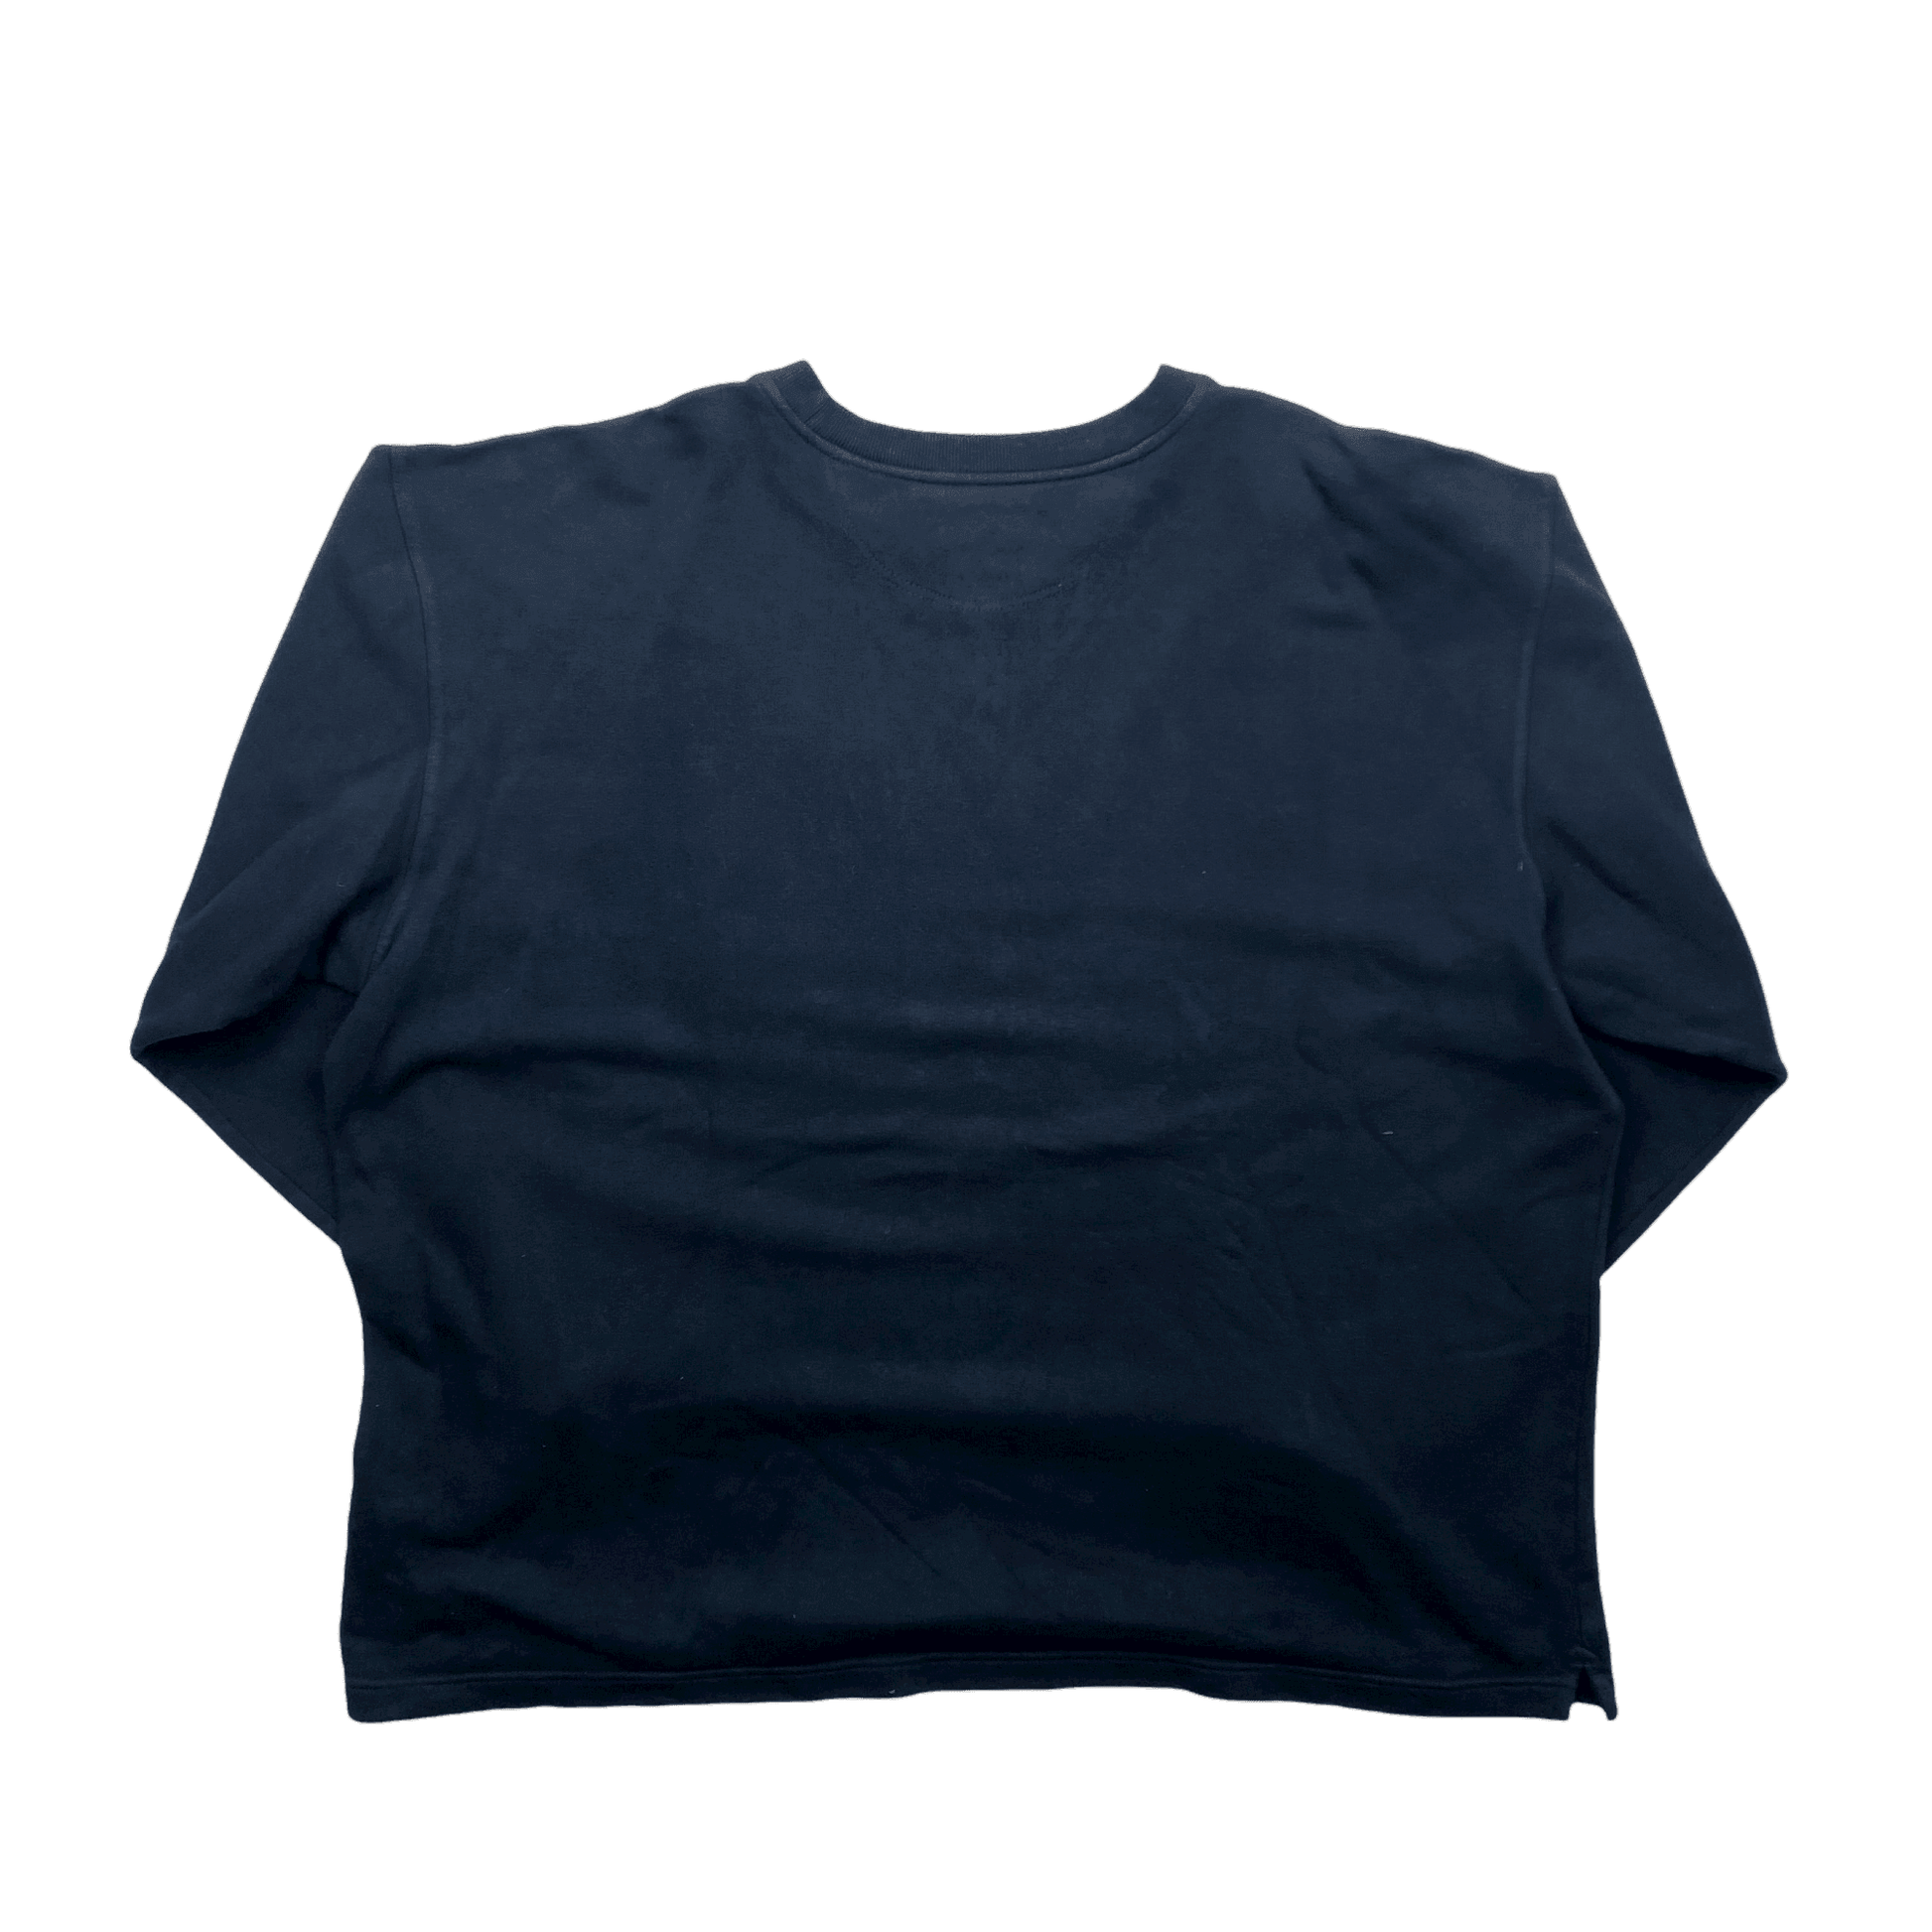 Vintage 90s Navy Blue Nike Sweatshirt - Extra Large - The Streetwear Studio